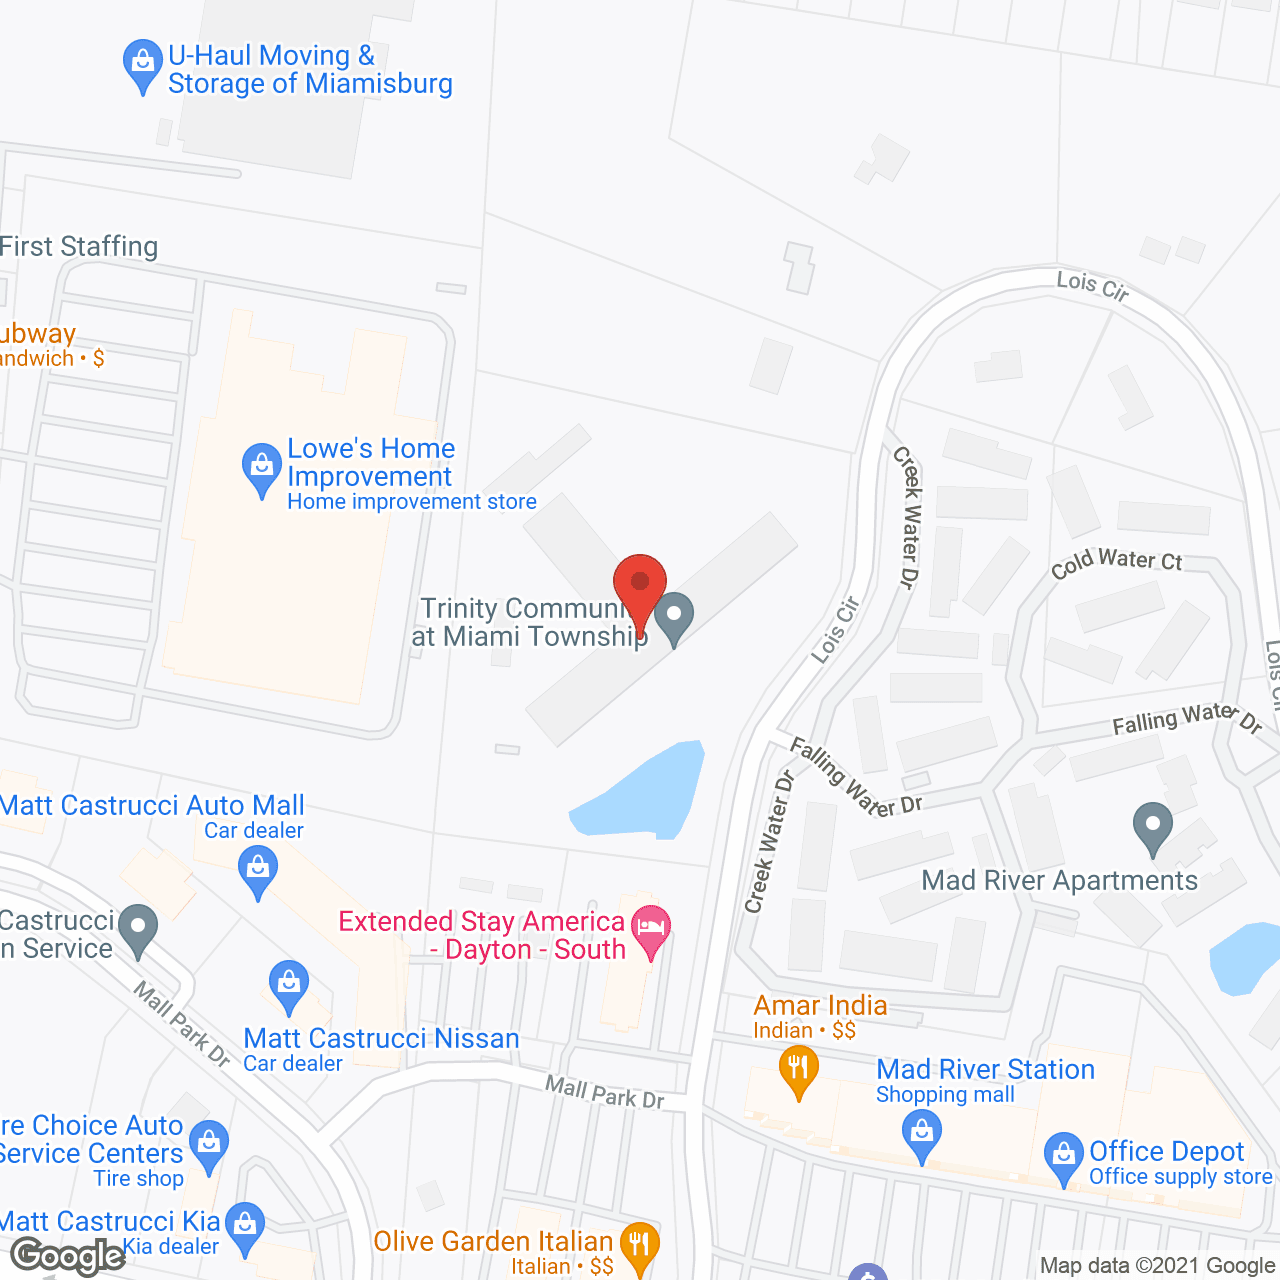 Trinity Community at Miami Township in google map